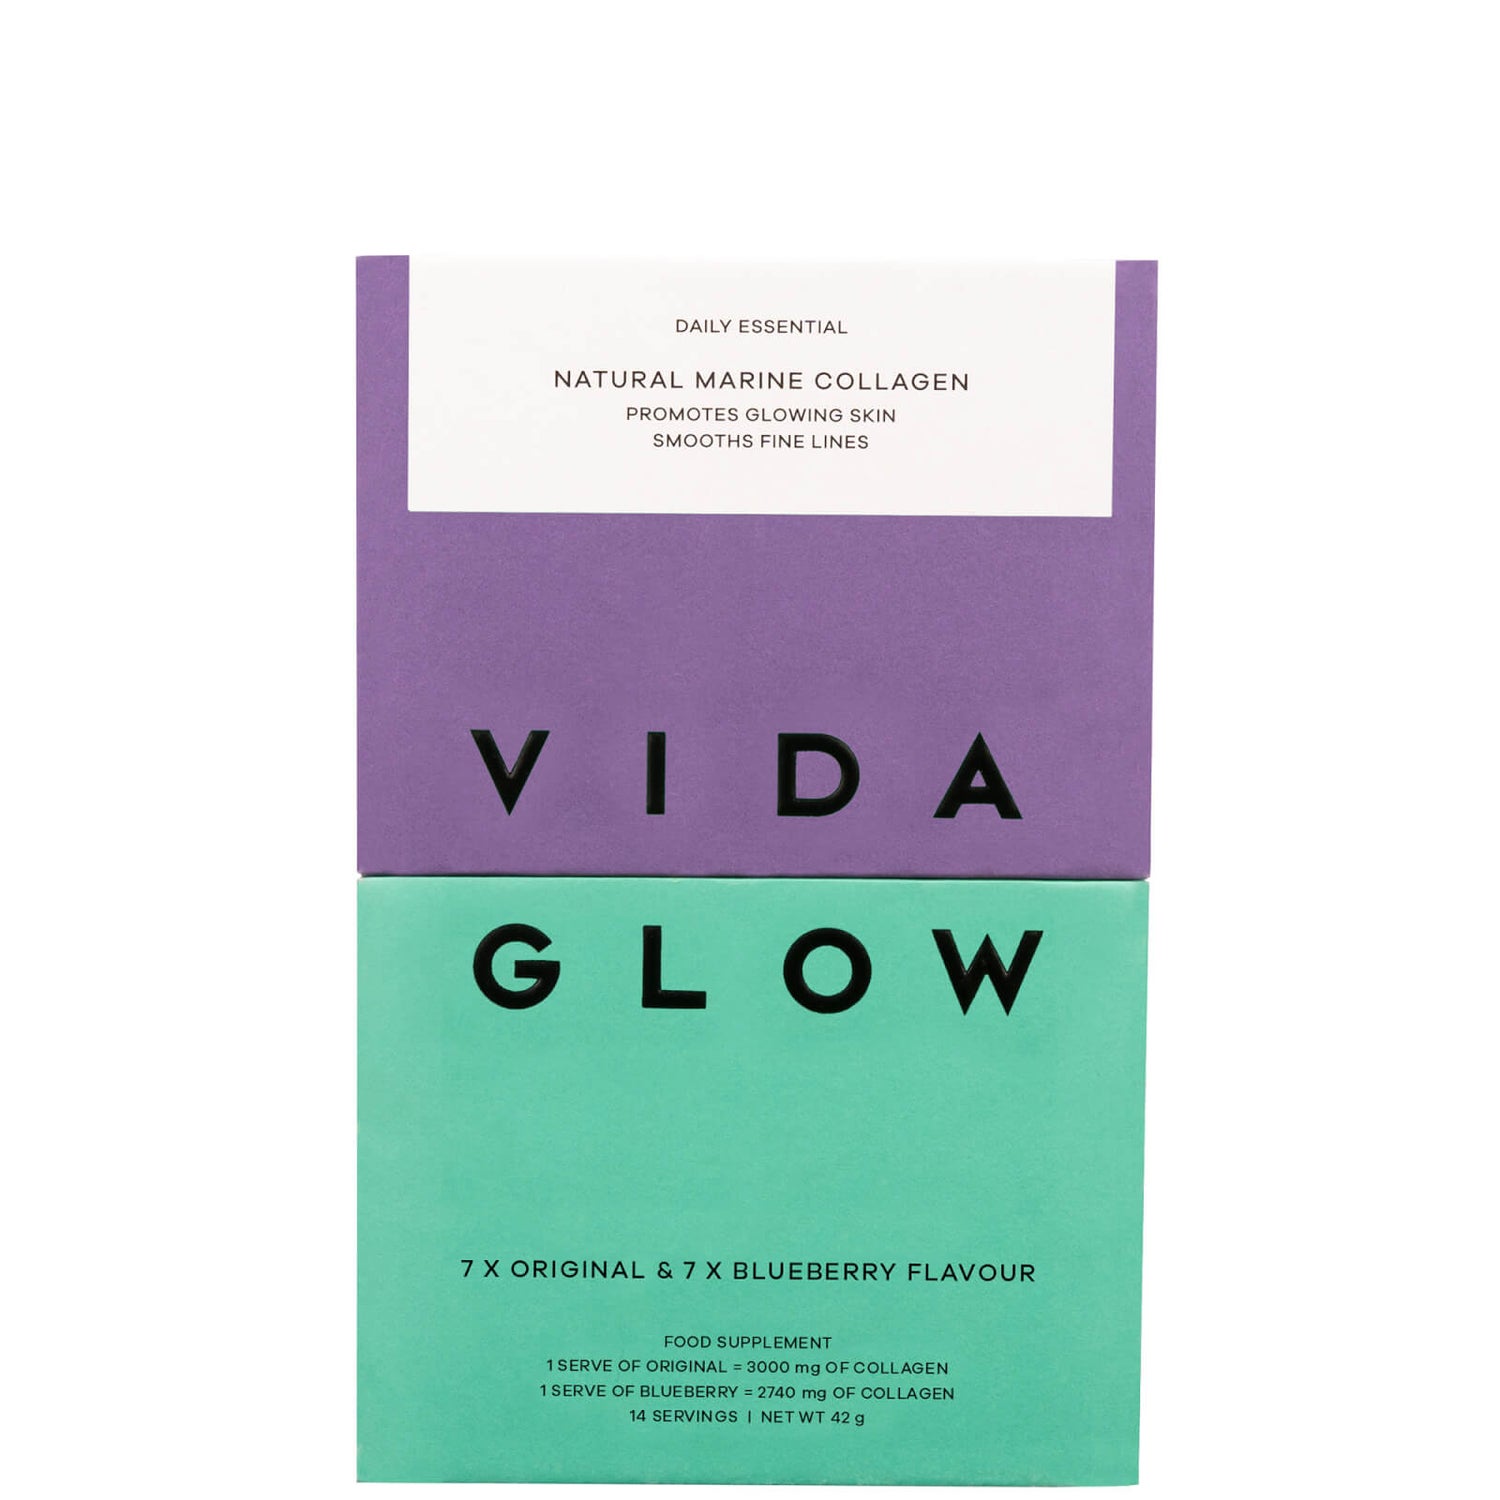 Vida Glow Mixed Natural Marine Collagen Trial Pack – 14 serves